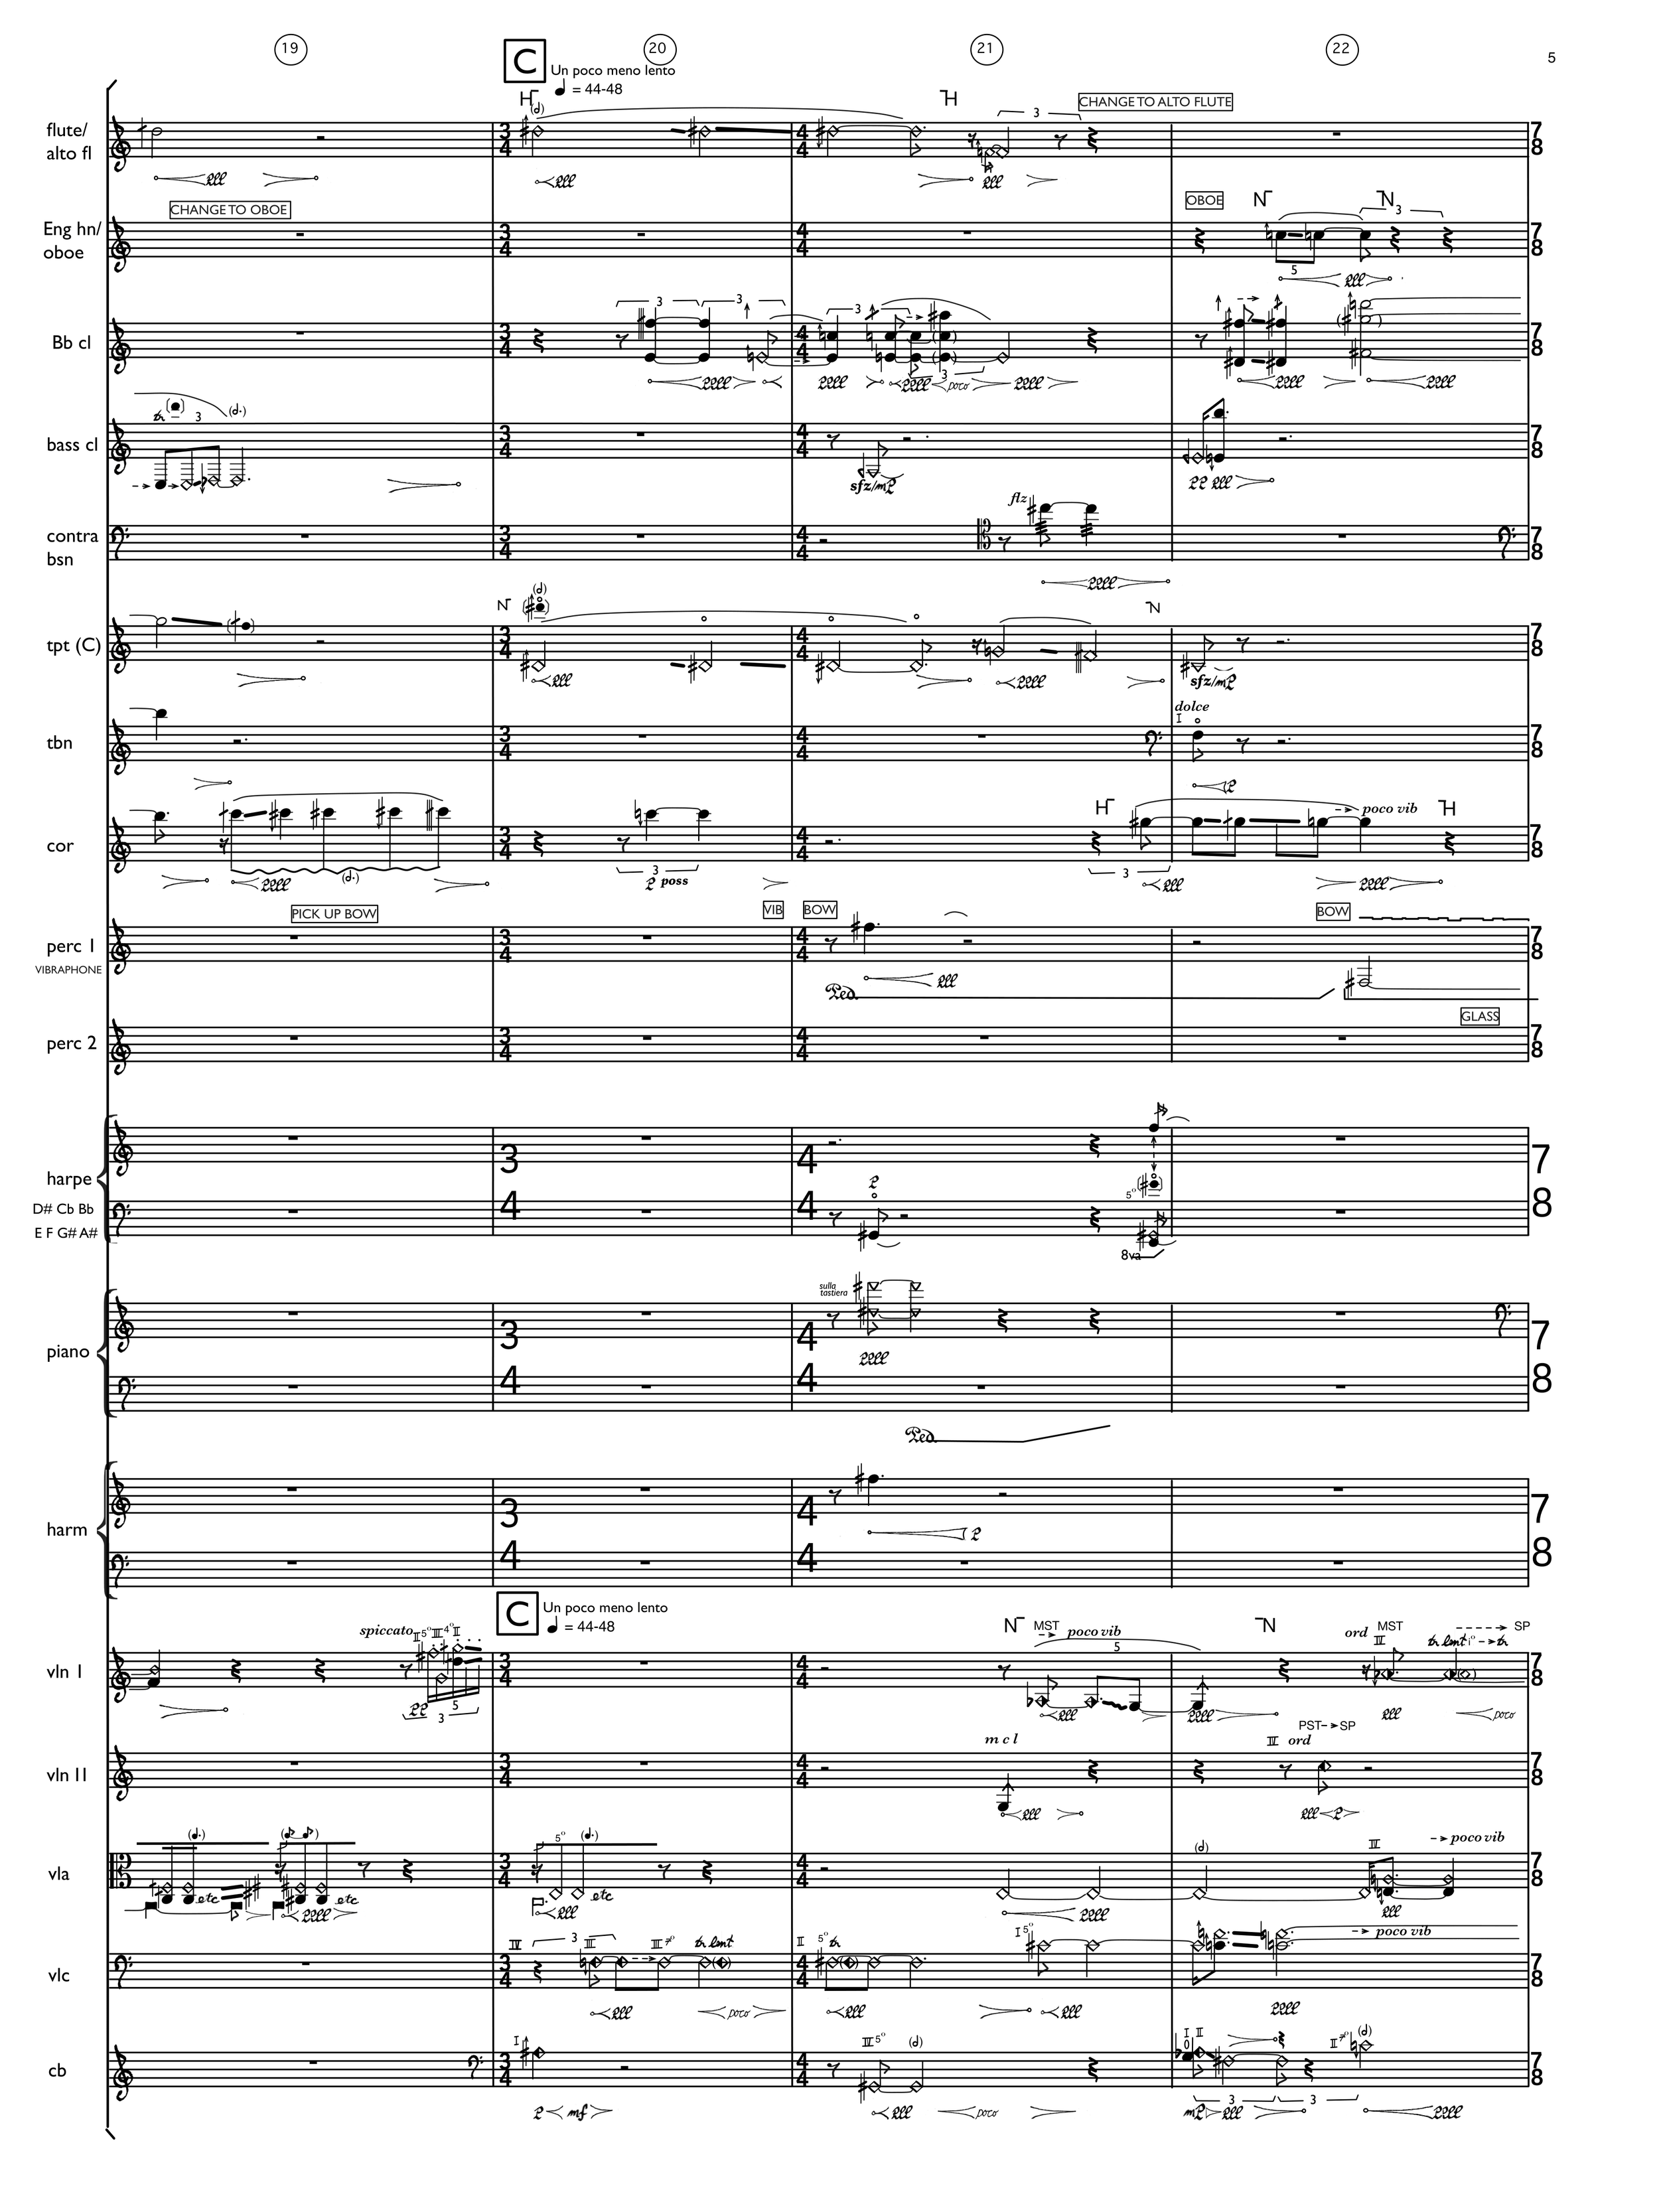 Alessandrini-Abhanden-00-score-notes-05.png